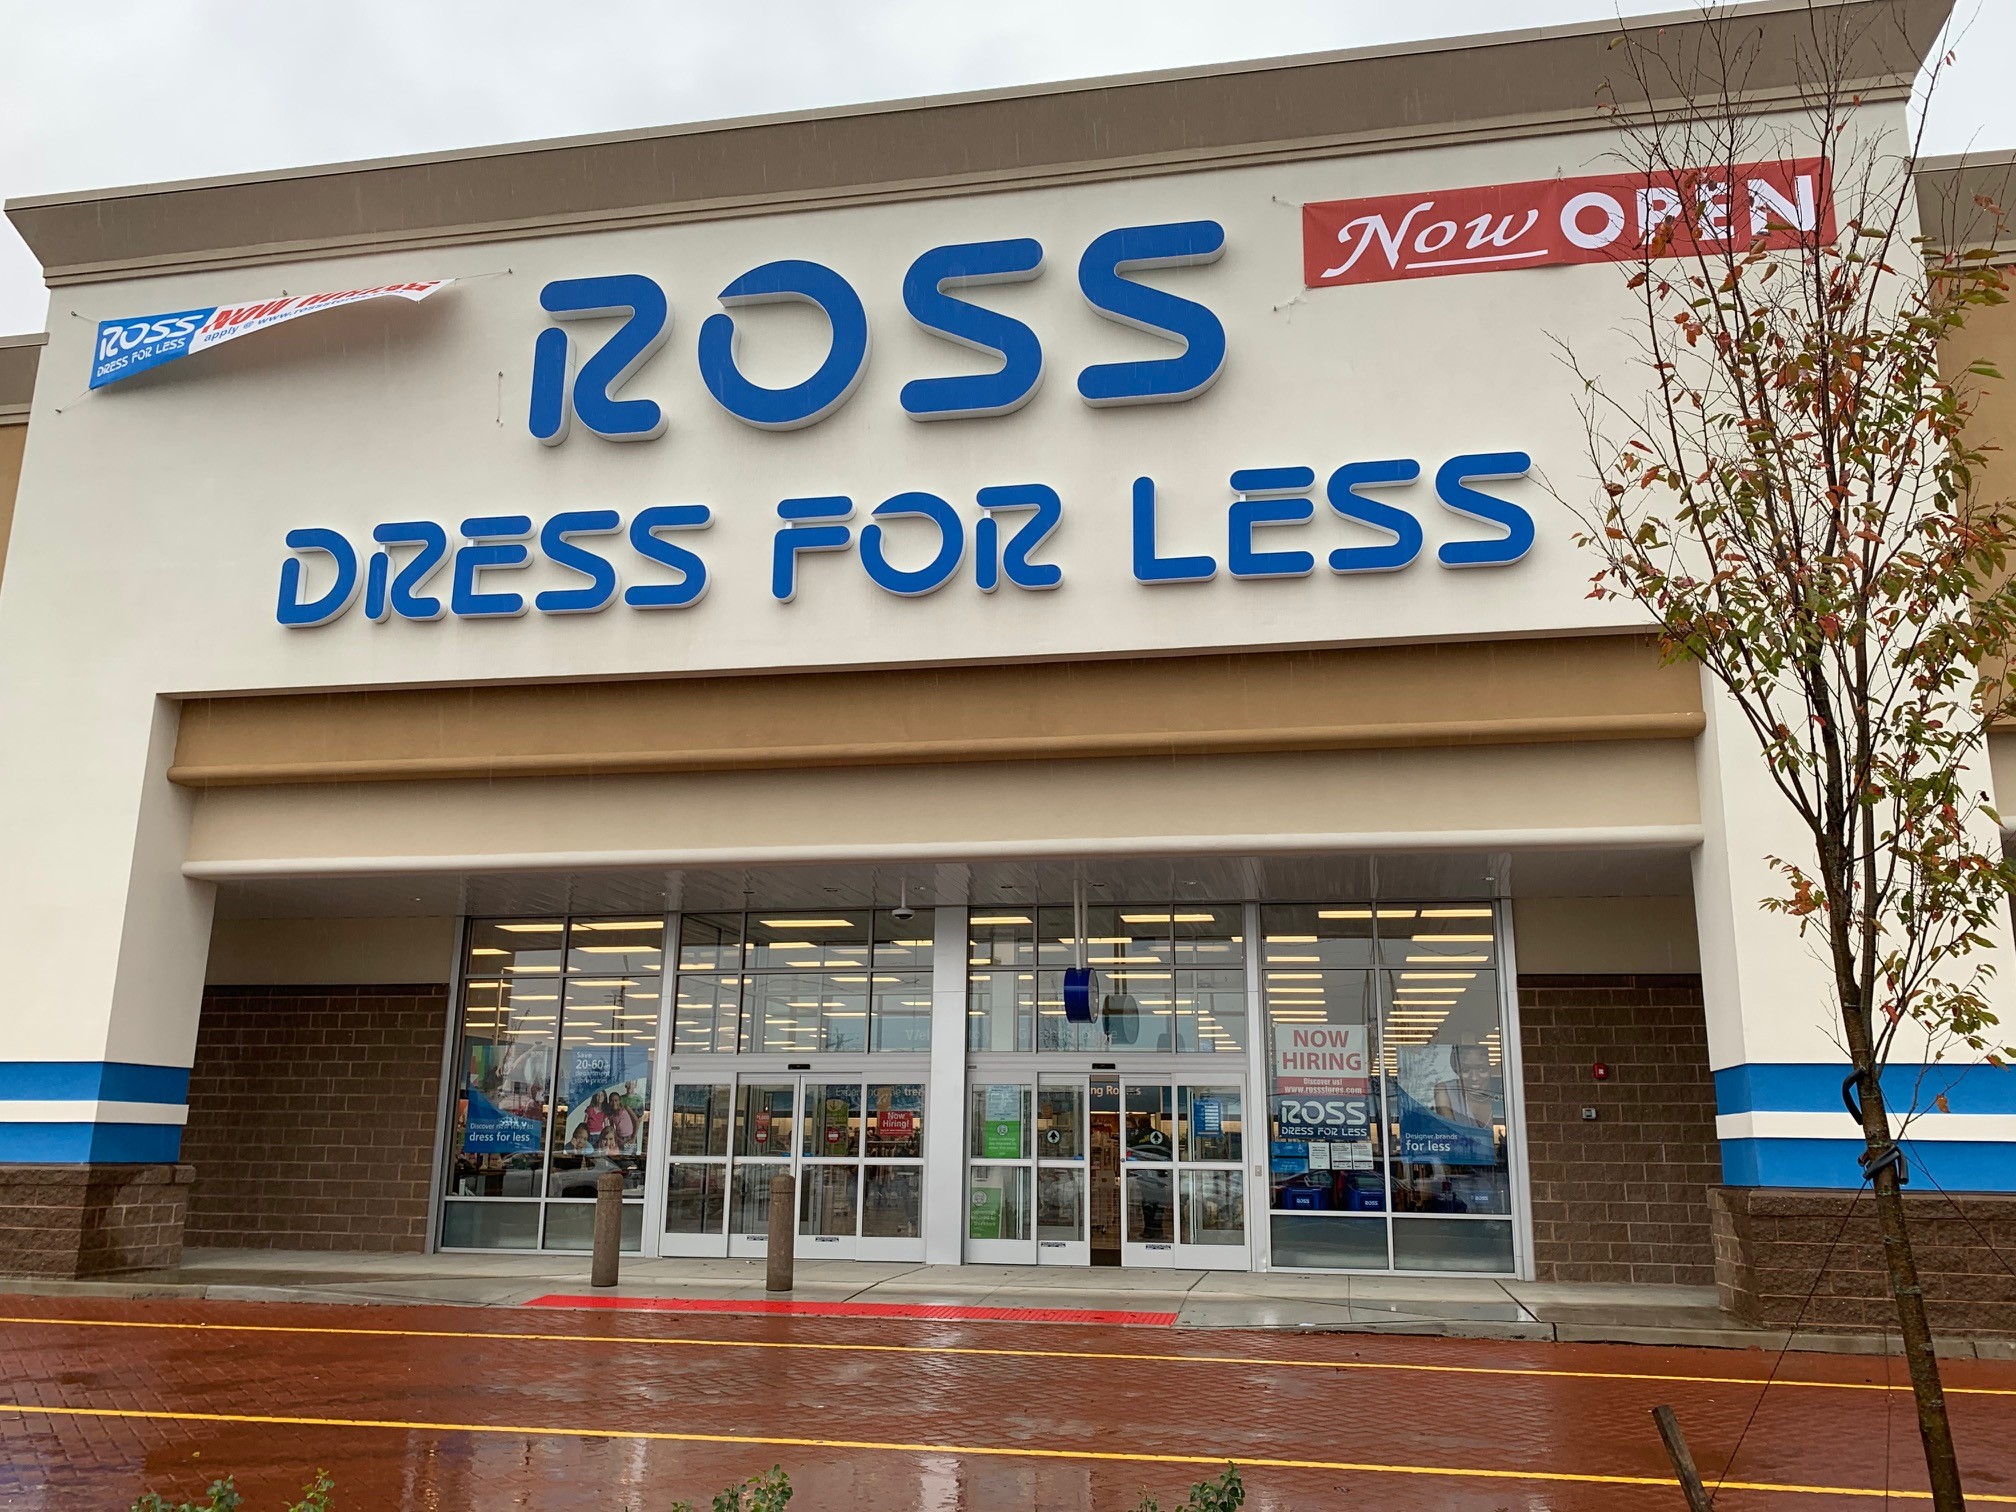 Ross Dress For Less at Collegetown Shopping Center